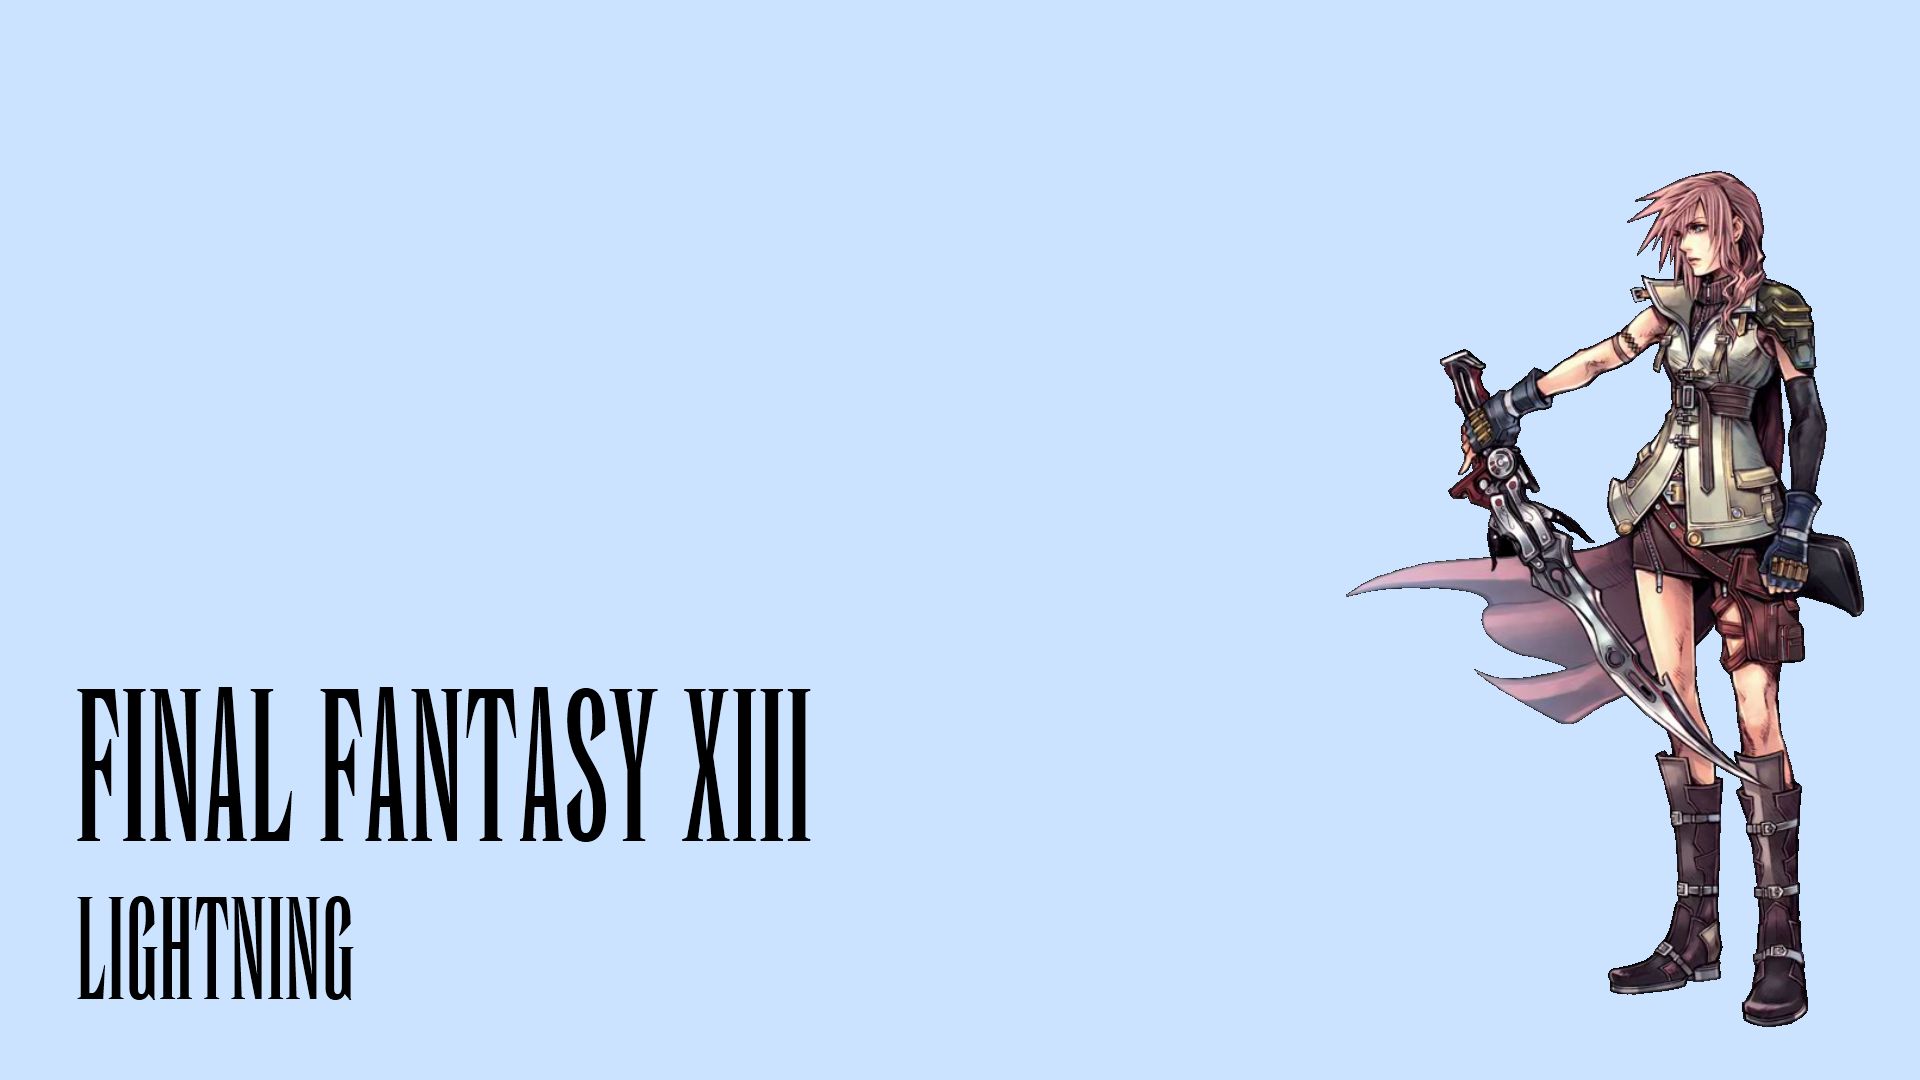 Descarga gratis la imagen Videojuego, Fainaru Fantajî, Rayo (Final Fantasy), Fainaru Fantajî Xiii en el escritorio de tu PC